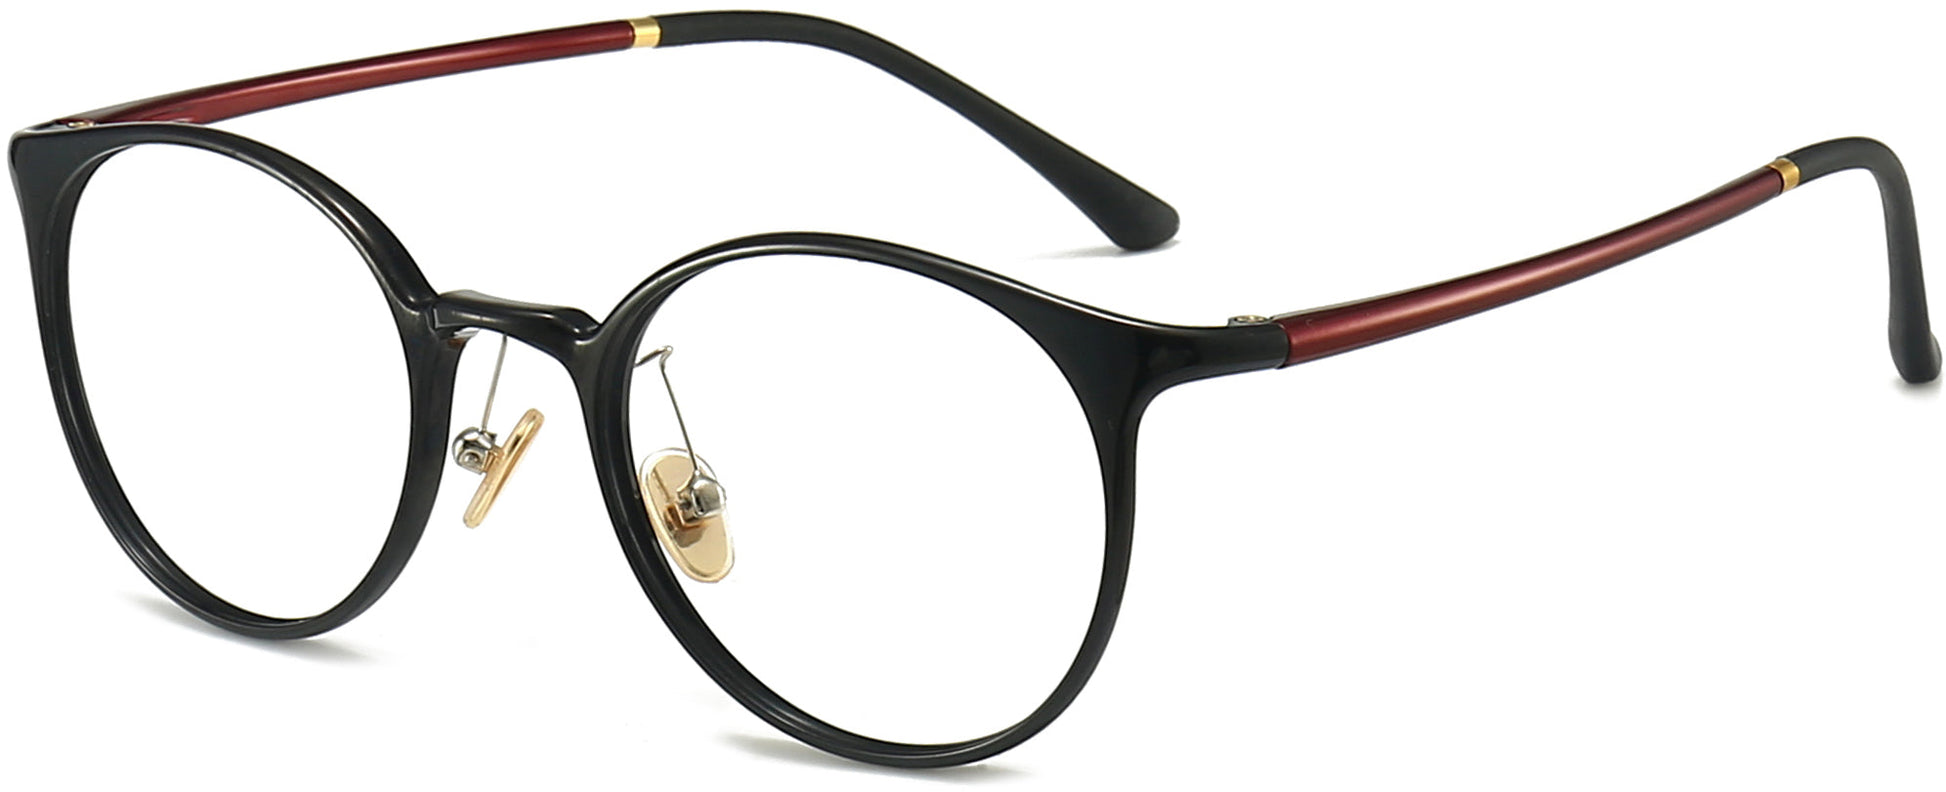 Cecelia Round Black Eyeglasses from ANRRI, angle view